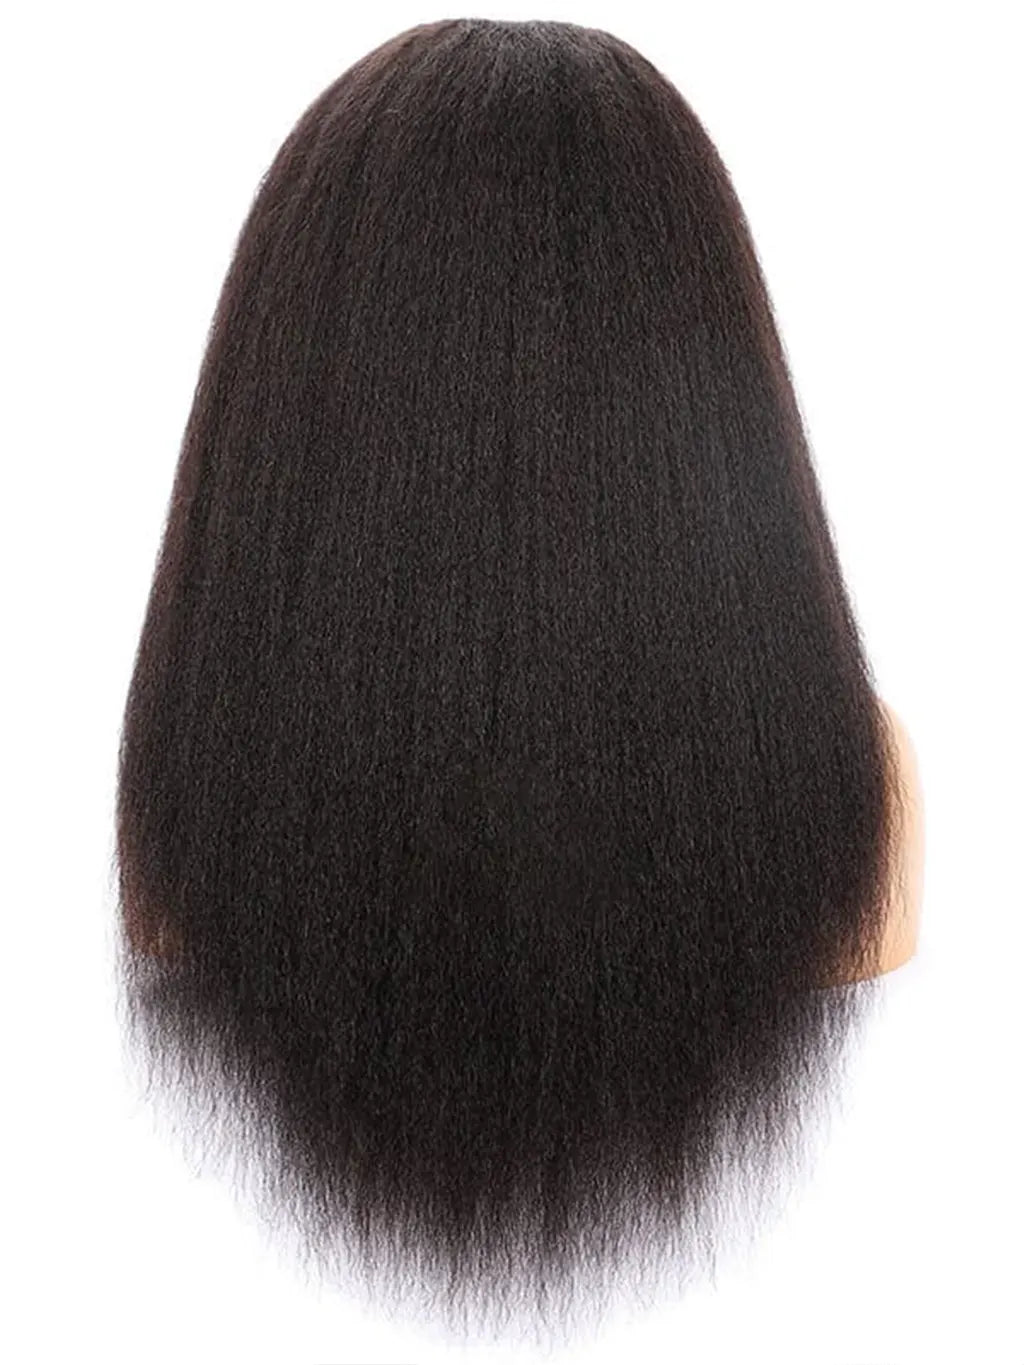 V Part Wig Human Hair Kinky Straight Human Hair Wigs for Black Women 150% Density Yaki V Part Wig Human Hair Upgrade U Part Glueless Full Head Clip In Half Wig V Shape Wigs Yaki Straight Human Hair Wigs